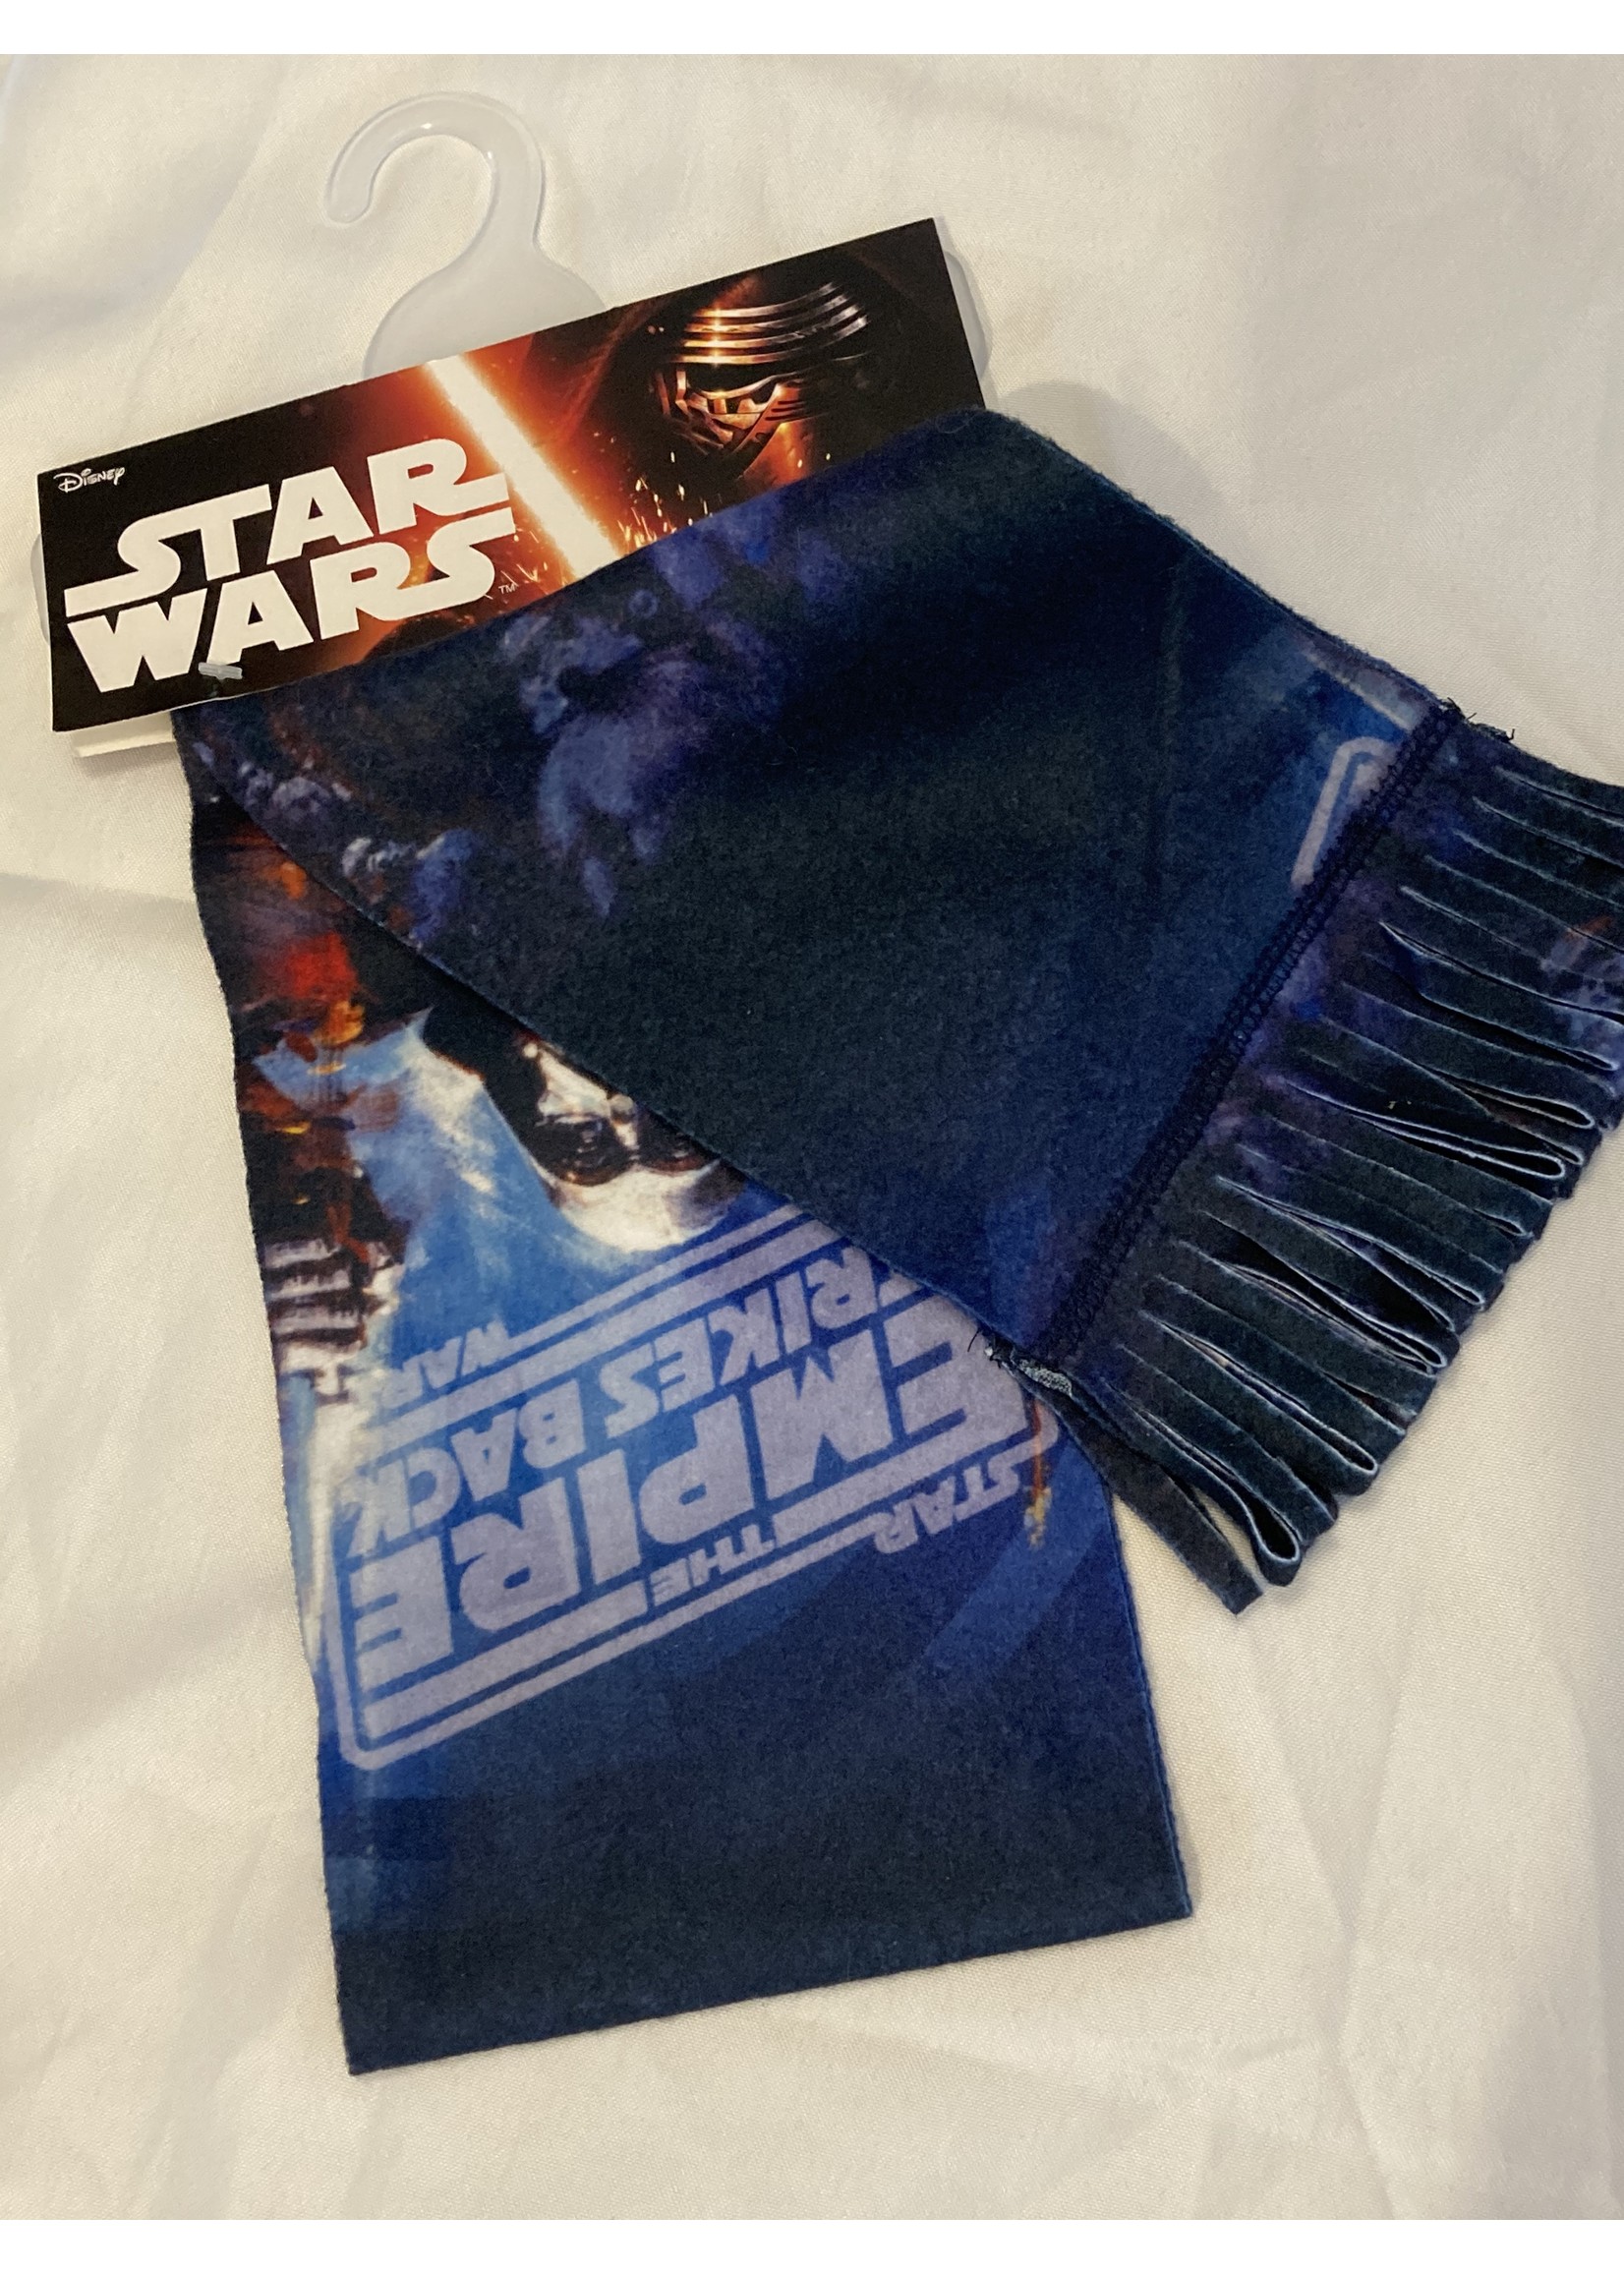 Disney Star Wars scarf from Disney navy blue